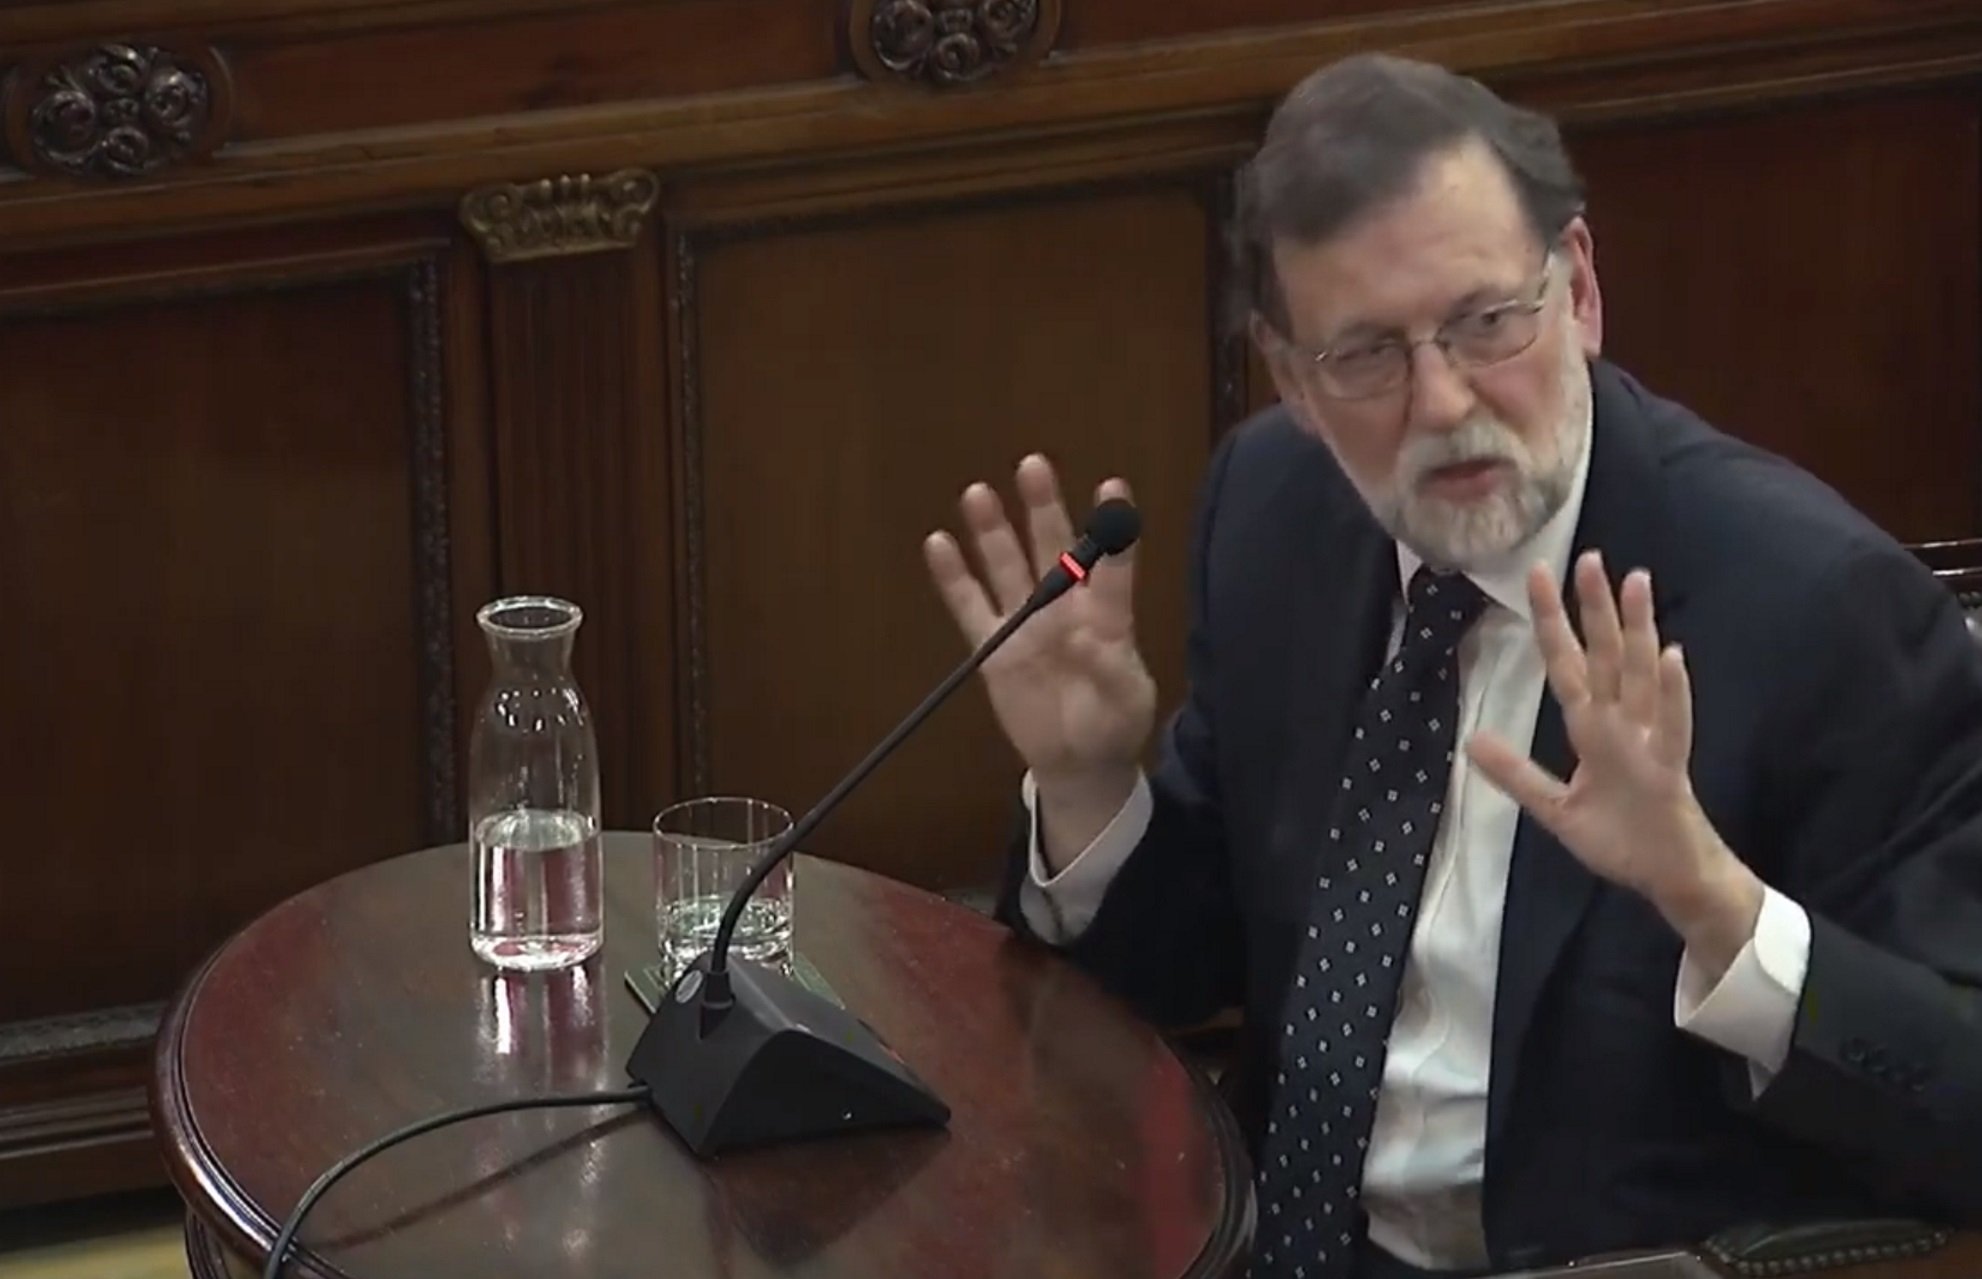 judici procés Mariano Rajoy mans